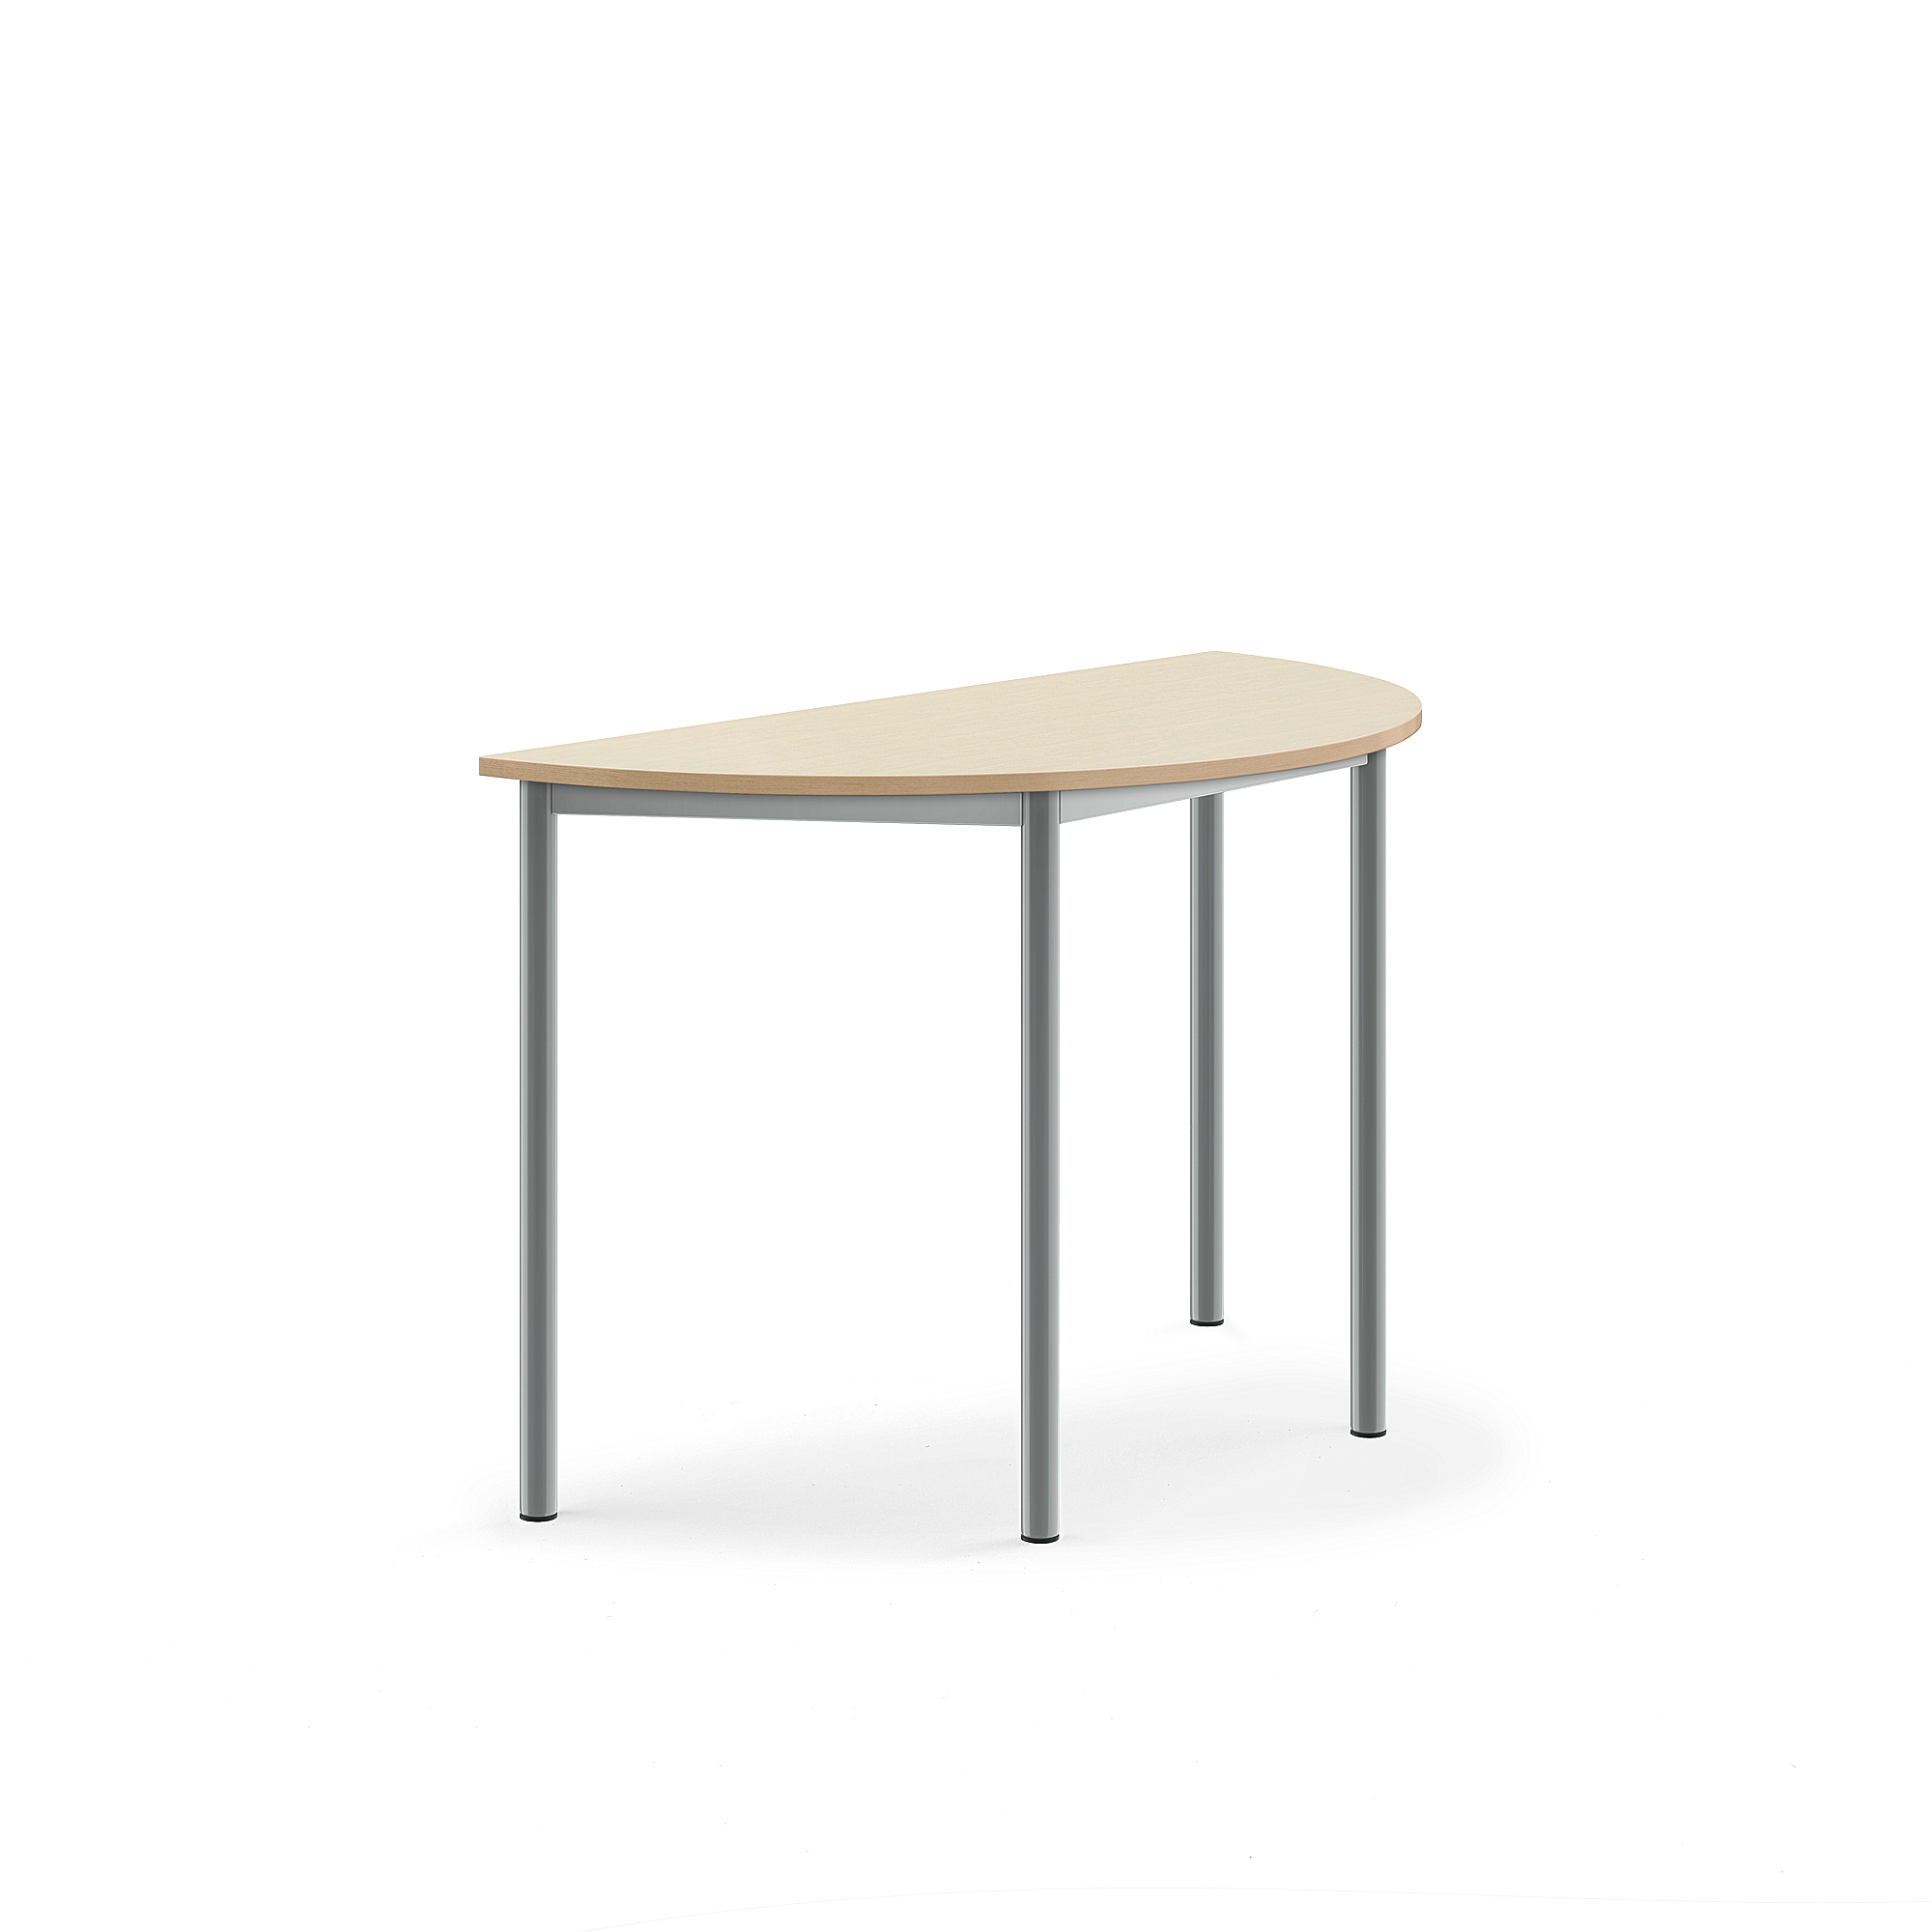 Stůl SONITUS, půlkruh, 1200x600x760 mm, stříbrné nohy, HPL deska tlumící hluk, bříza